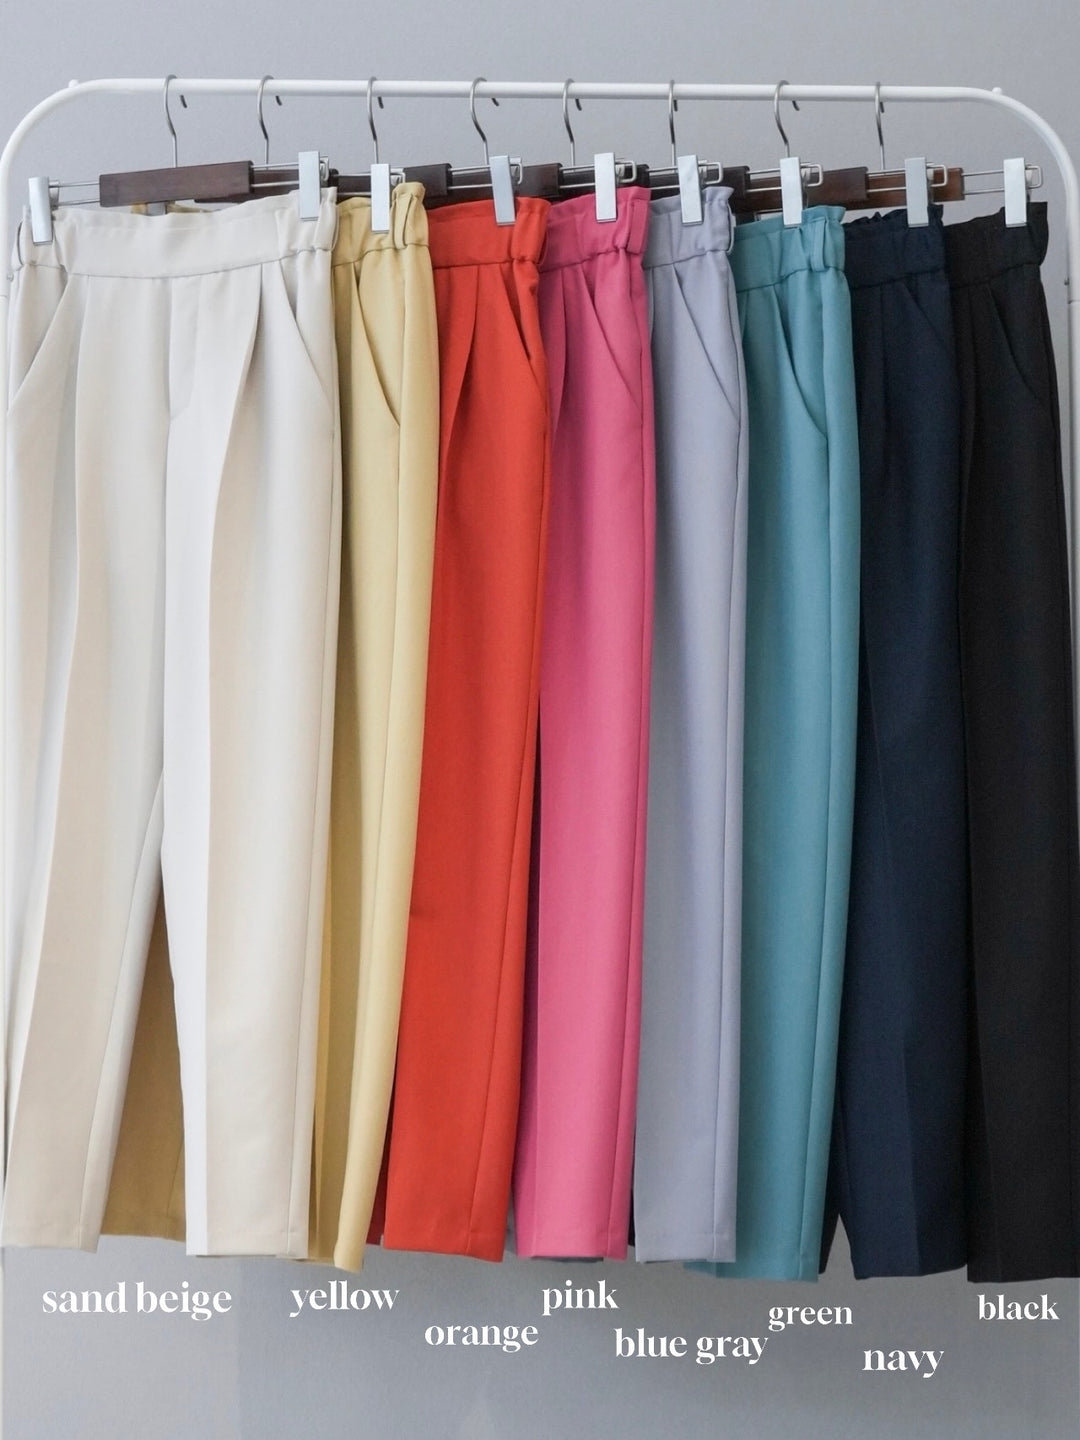 [SET] Sheer layered sleeveless top + easy tapered pants (2set)